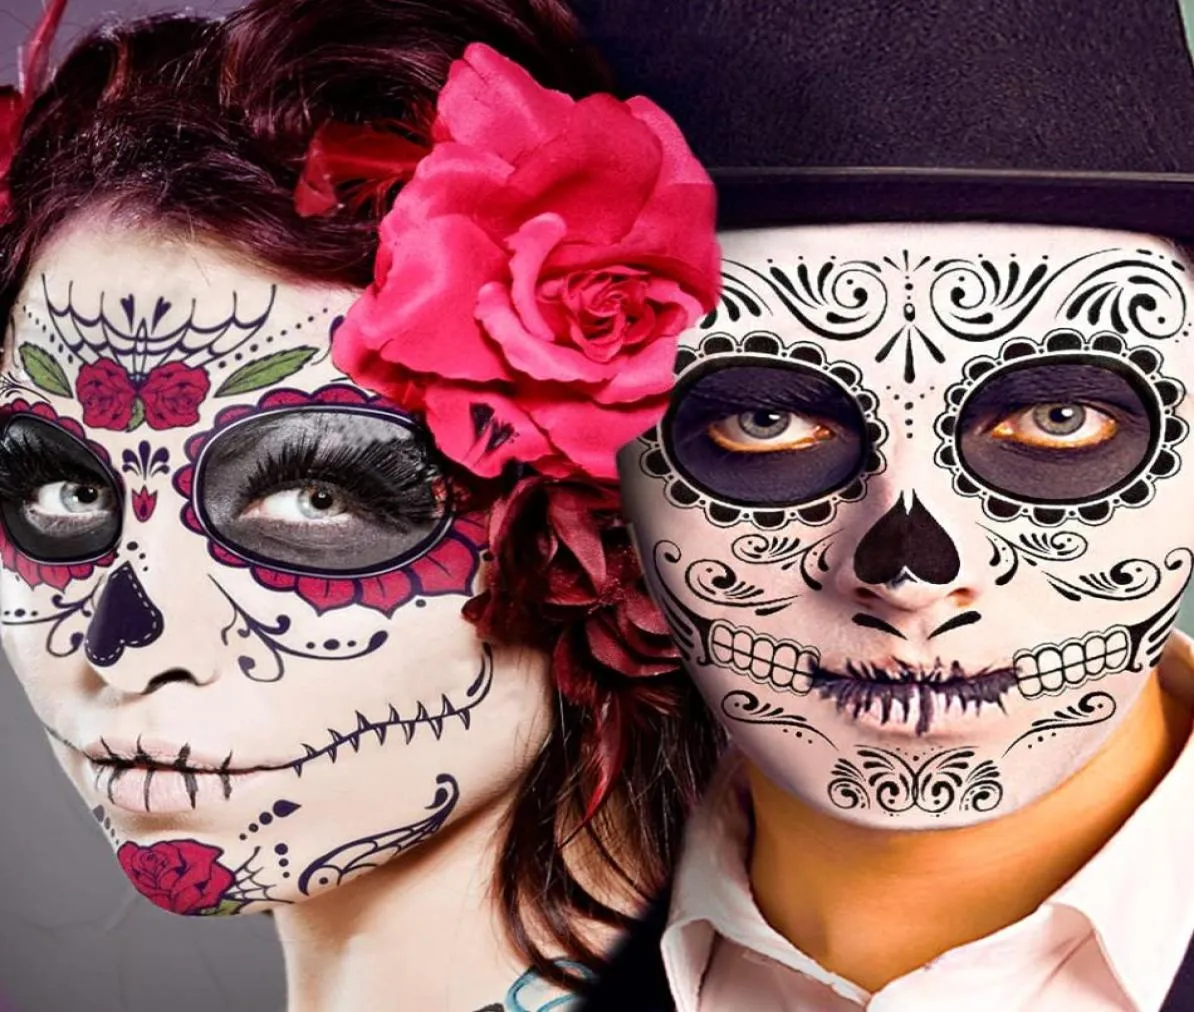 Dao of the Dead Face Tattoos 10シートハロウィーン一時的なステッカーキットDia de Los Muertos Glitter Red Roses Skeleton Sugar Skull FA9607949